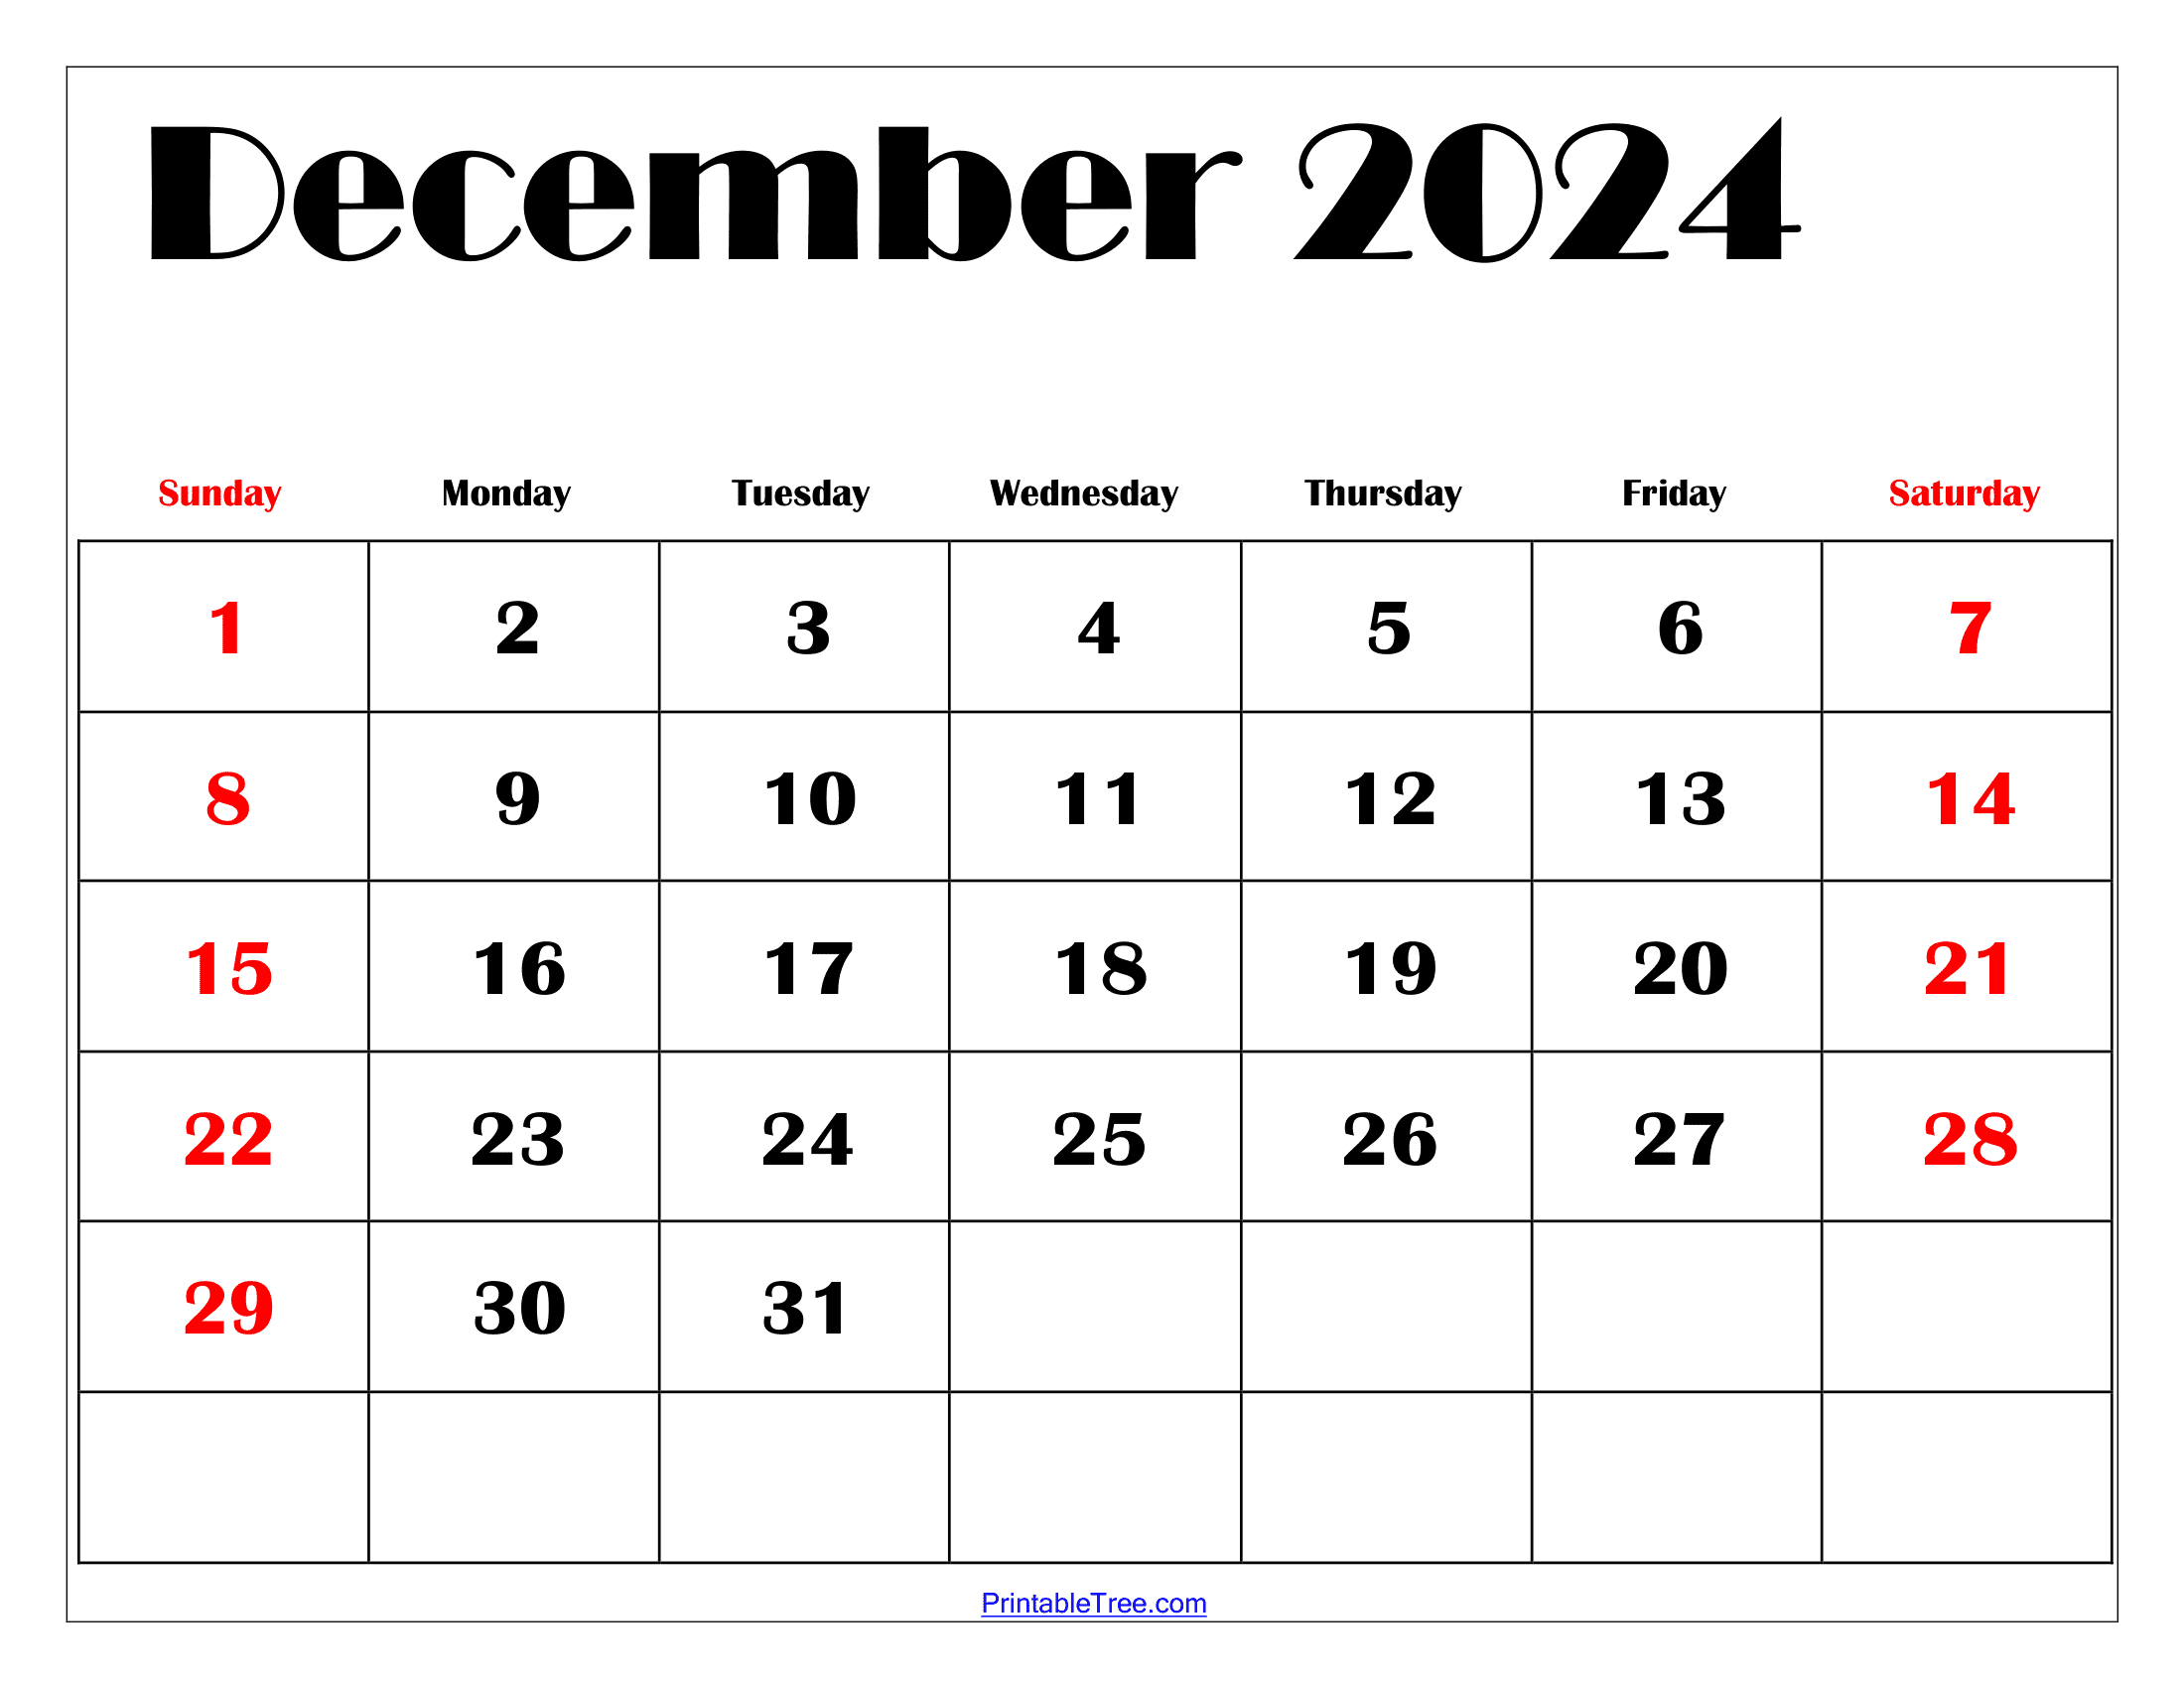 Printable Calendar December 2024 2024 Summer Solstice - Free Printable 2024 Calendar December